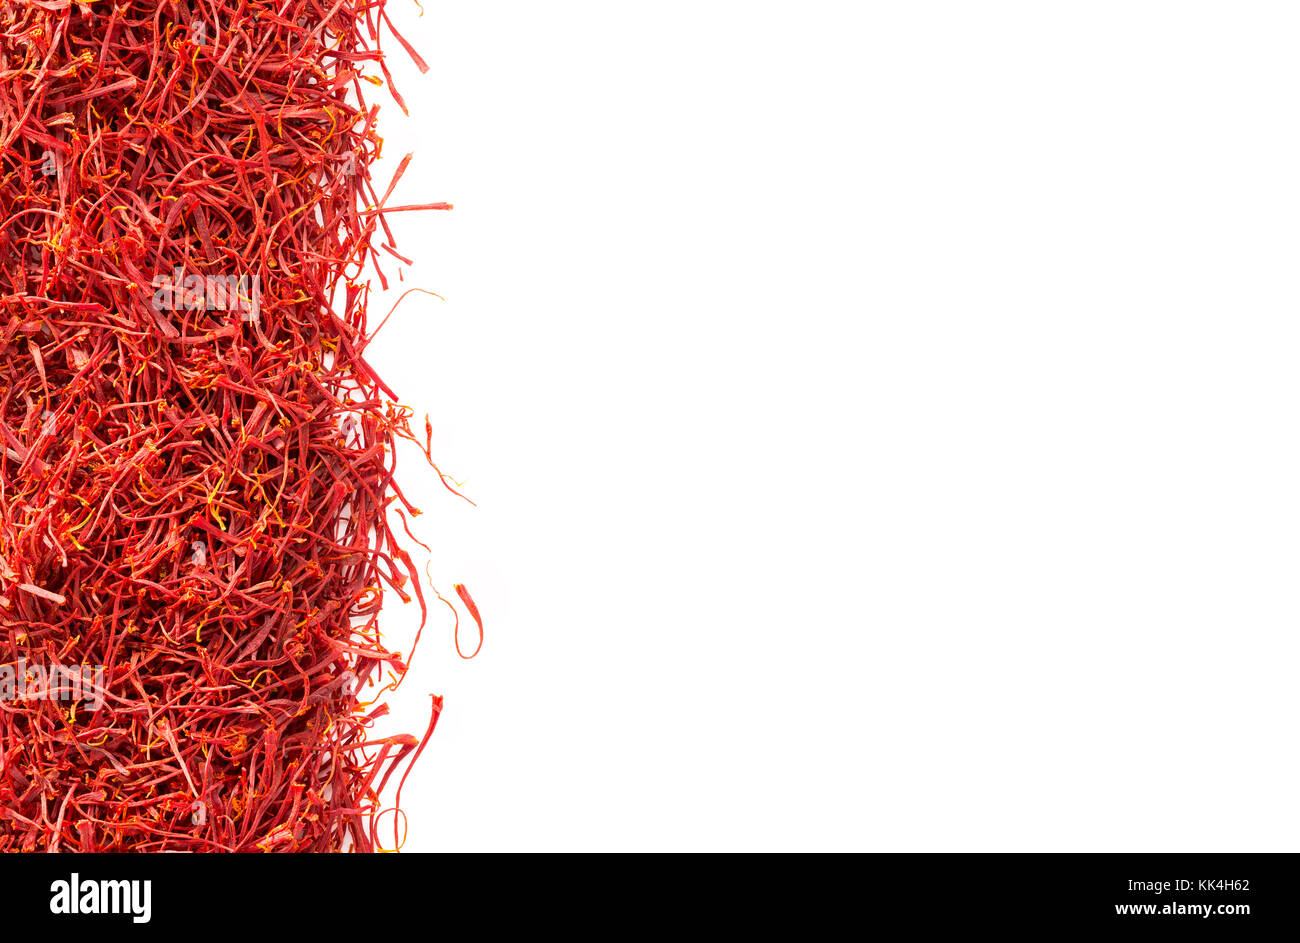 Streak of saffron crocus threads isolated on white background, image backgrounds Stock Photo